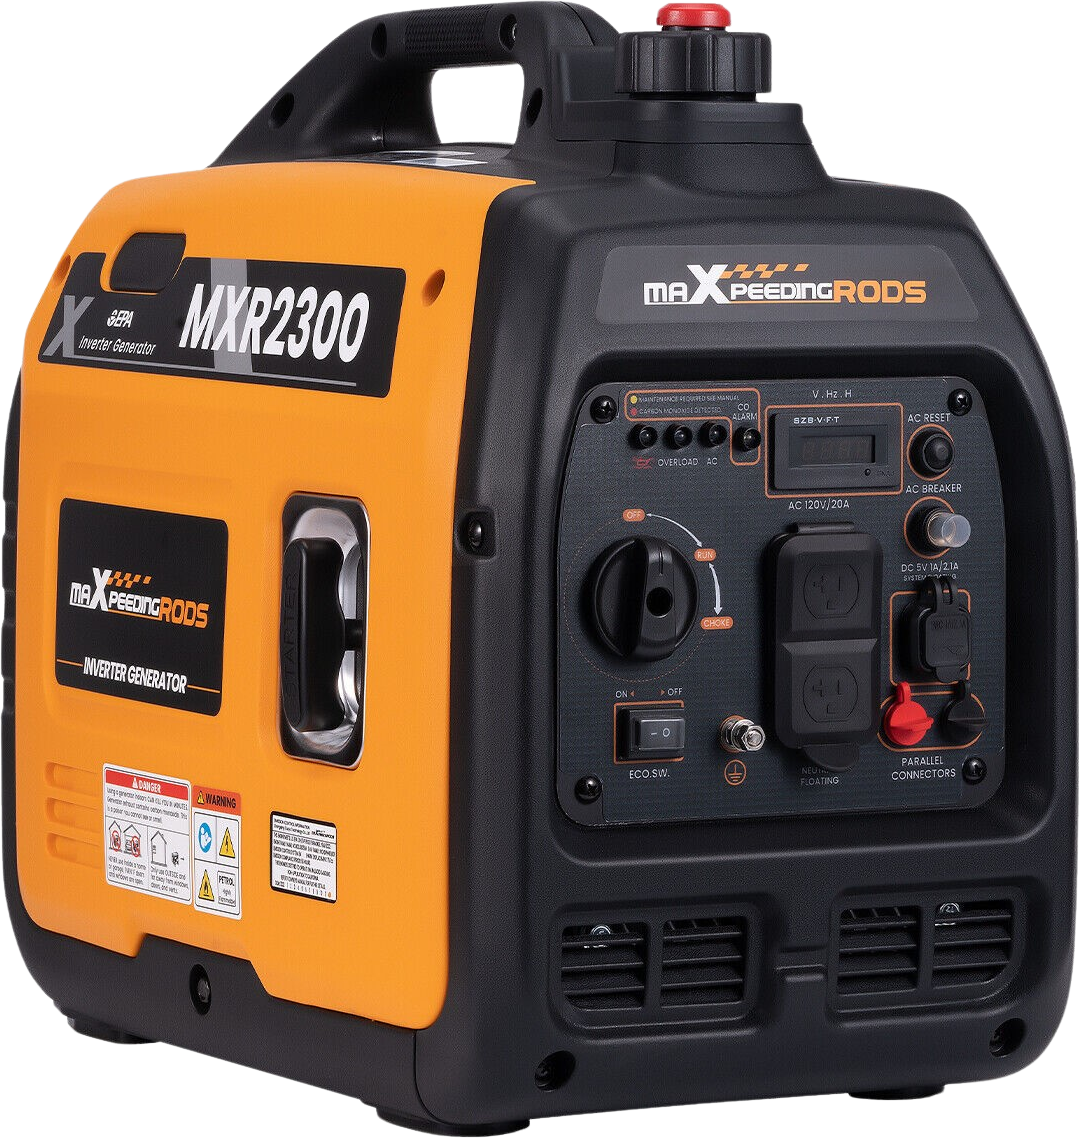 Maxpeedingrods, Maxpeedingrods MXR2300-US Inverter Generator 1800W/2300W Low THD Parallel Ready Gas New